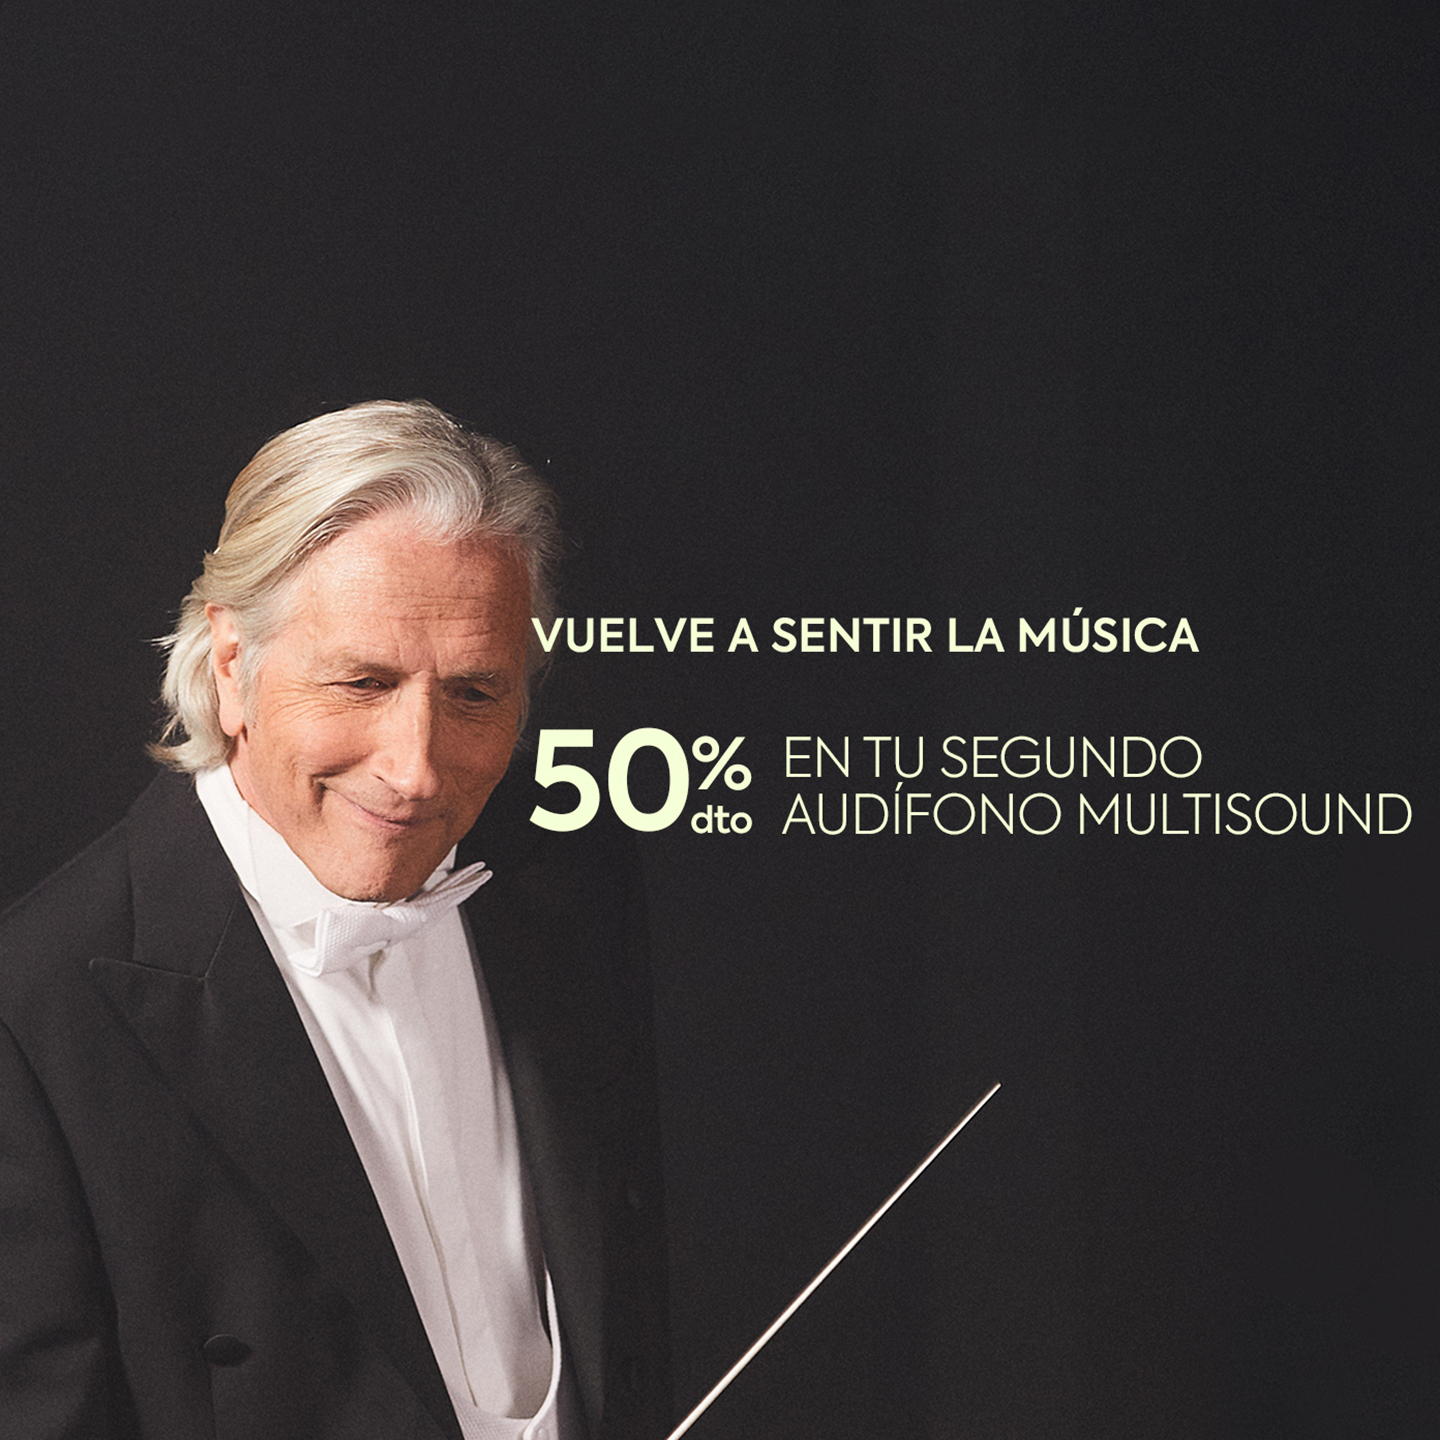 Multisound: Llévate tu segundo audífono con un 50% de descuento